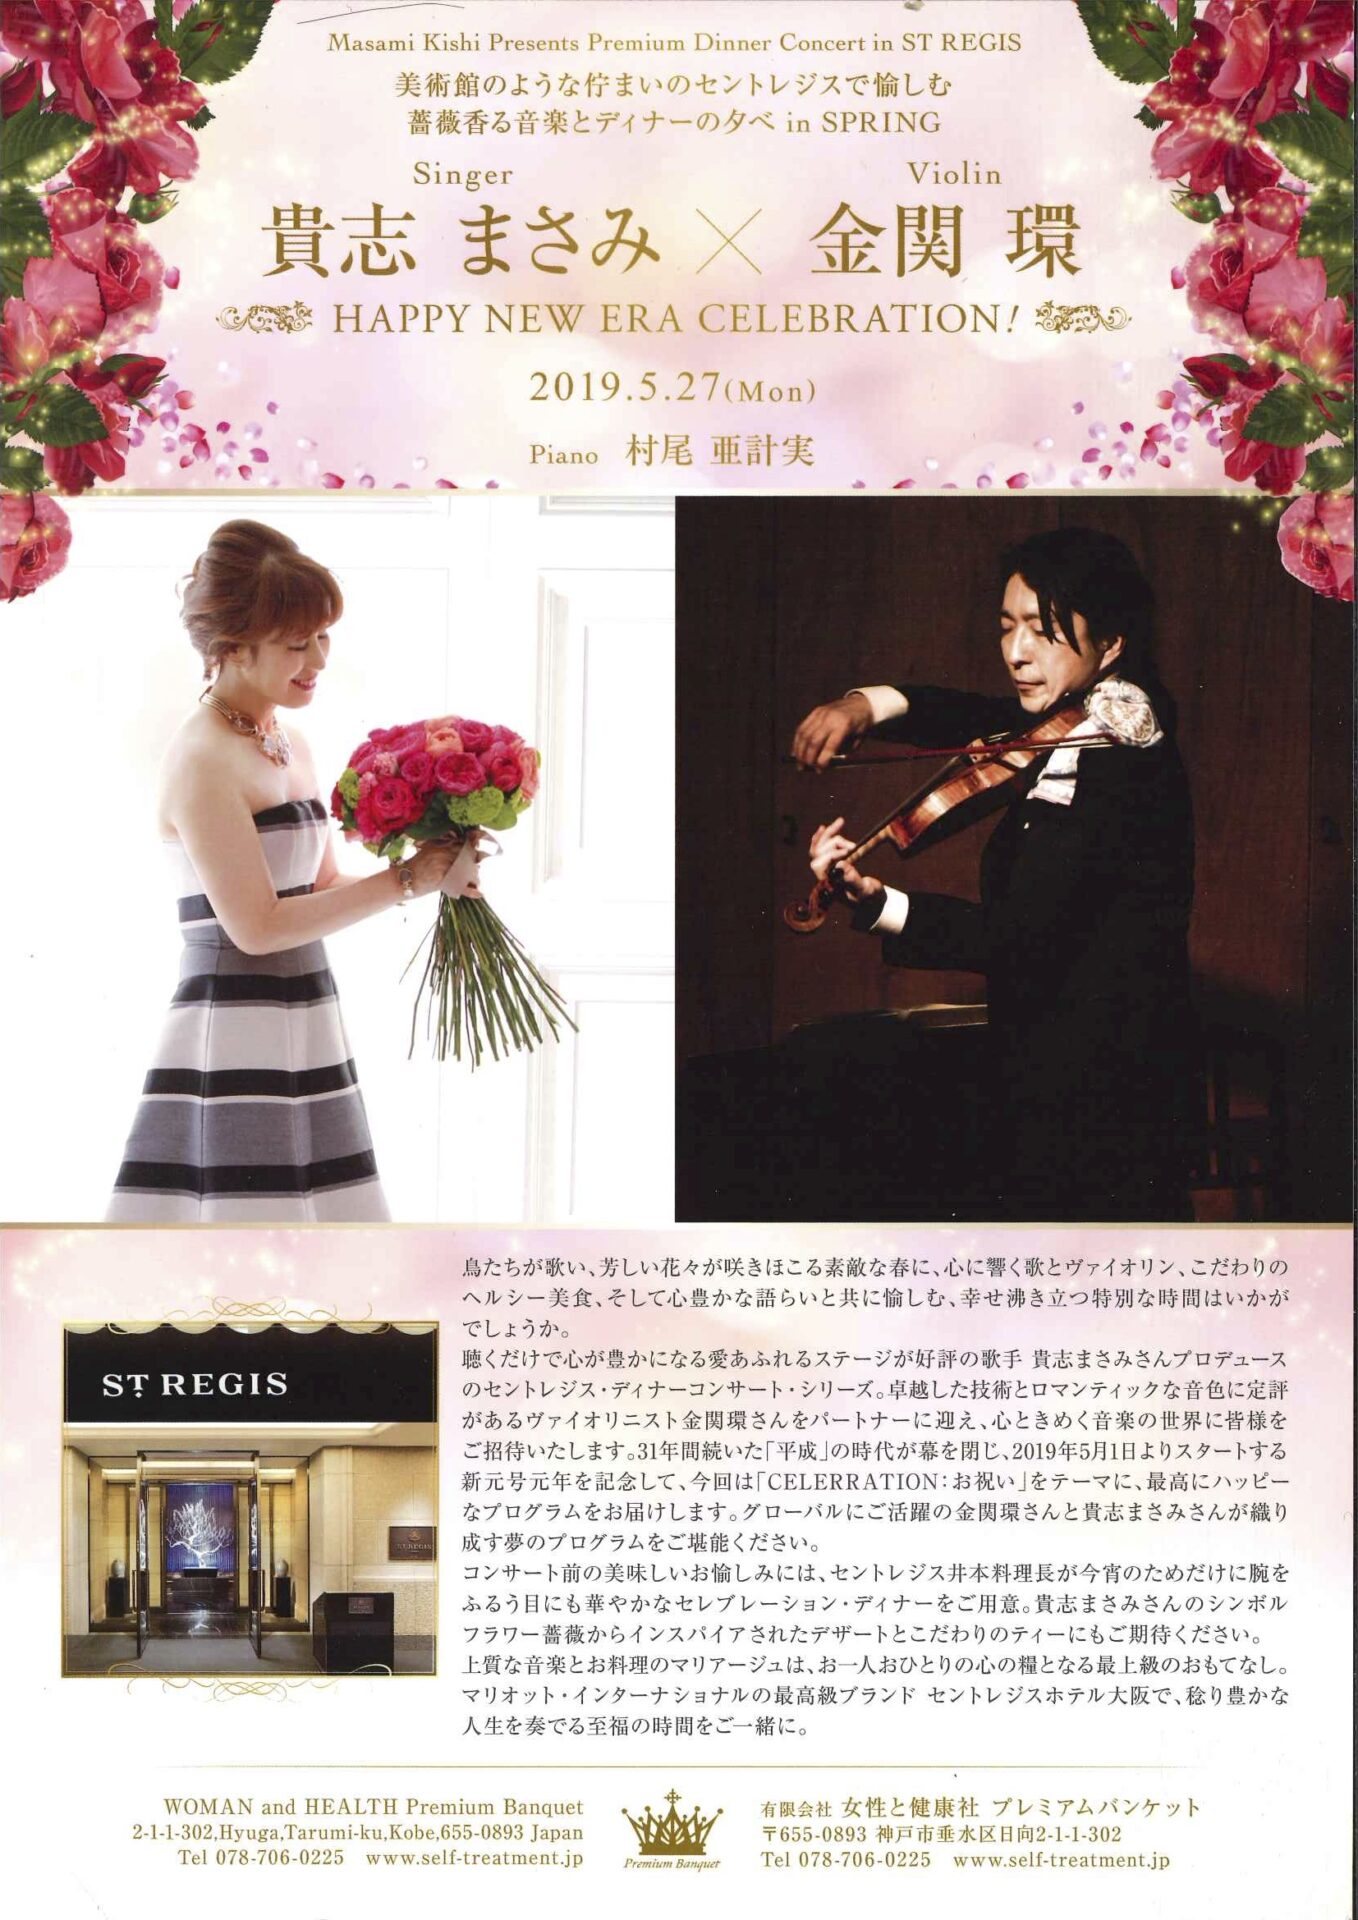 Featured image for “Premium Dinner Concert in The St. Regis Osaka 美術館のような佇まいのセントレジスで愉しむ、薔薇香る音楽とディナーの夕べ HAPPY NEW ERA CELEBRATION!”